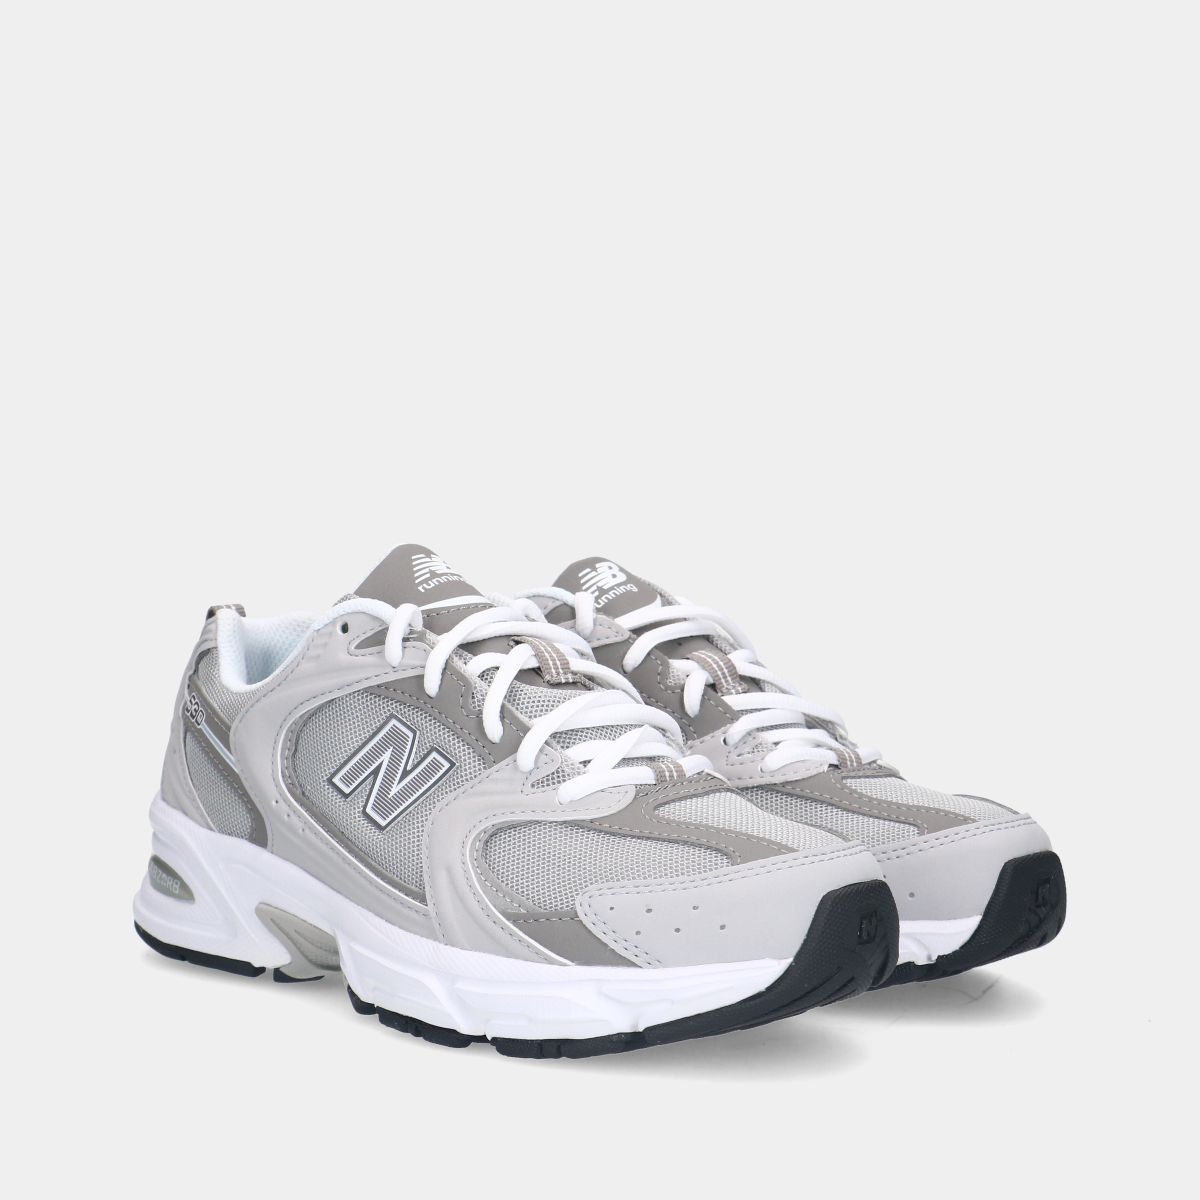 New Balance 530 Grey sneakers
